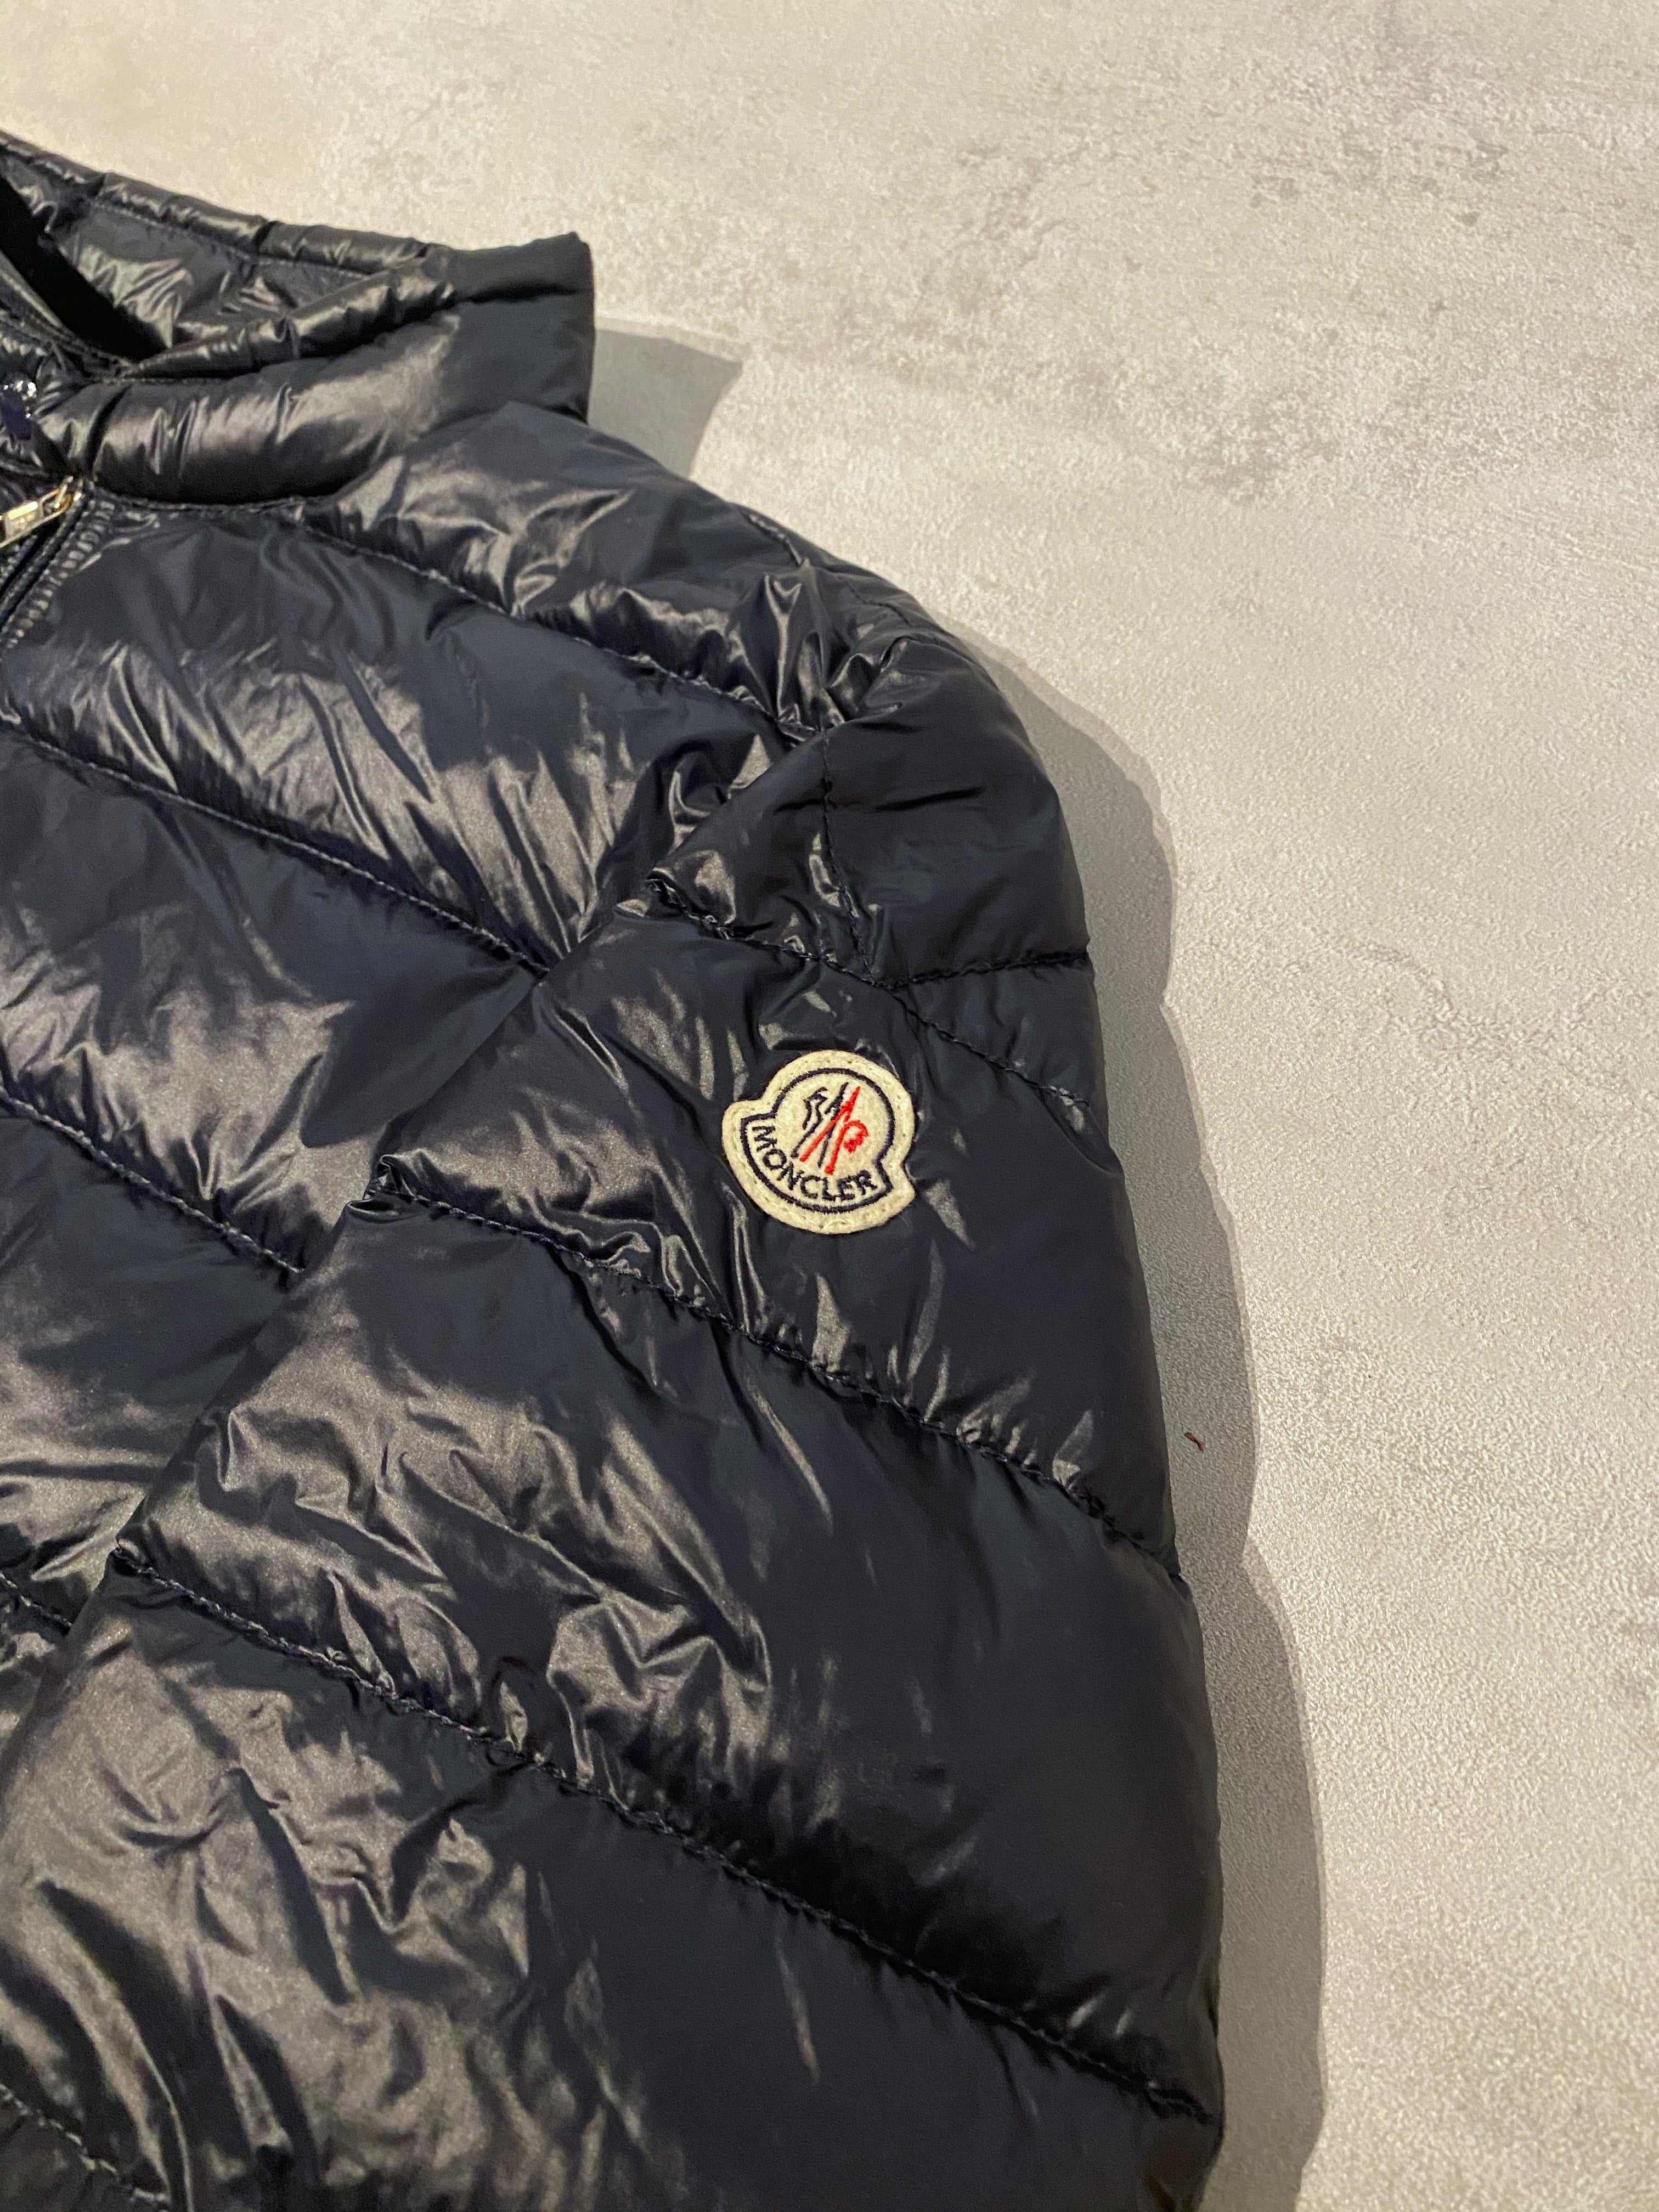 Moncler Acorus Jacket - Size 6